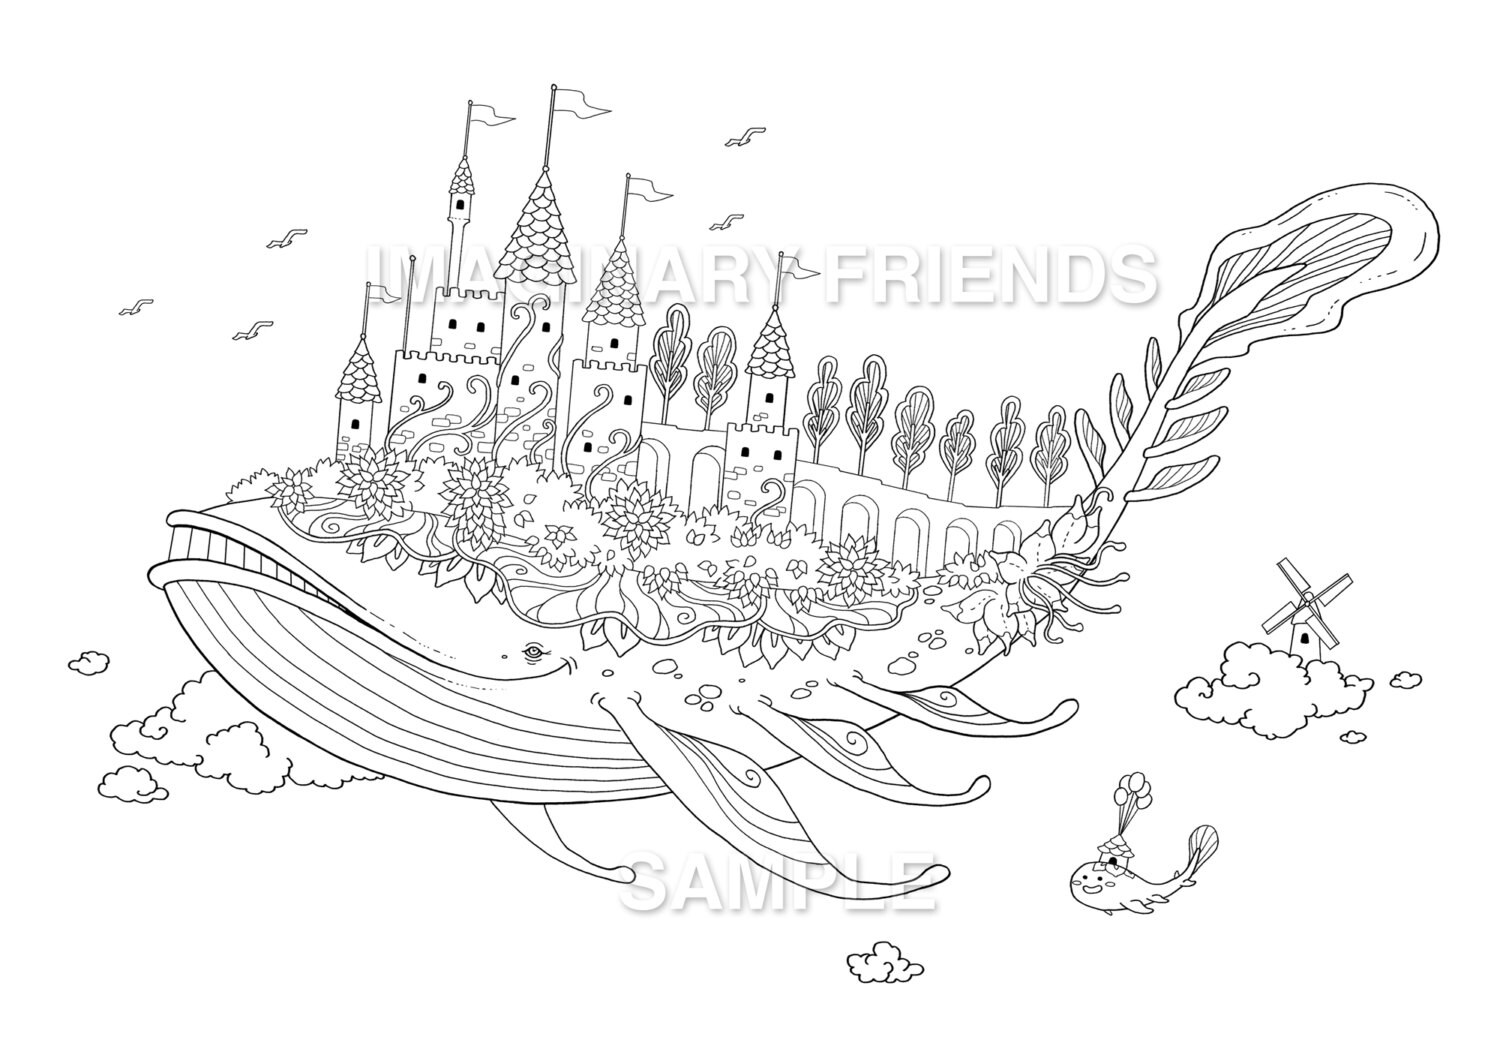 Whale castle Coloring Page A4 size 210 297mm \/ A3 size